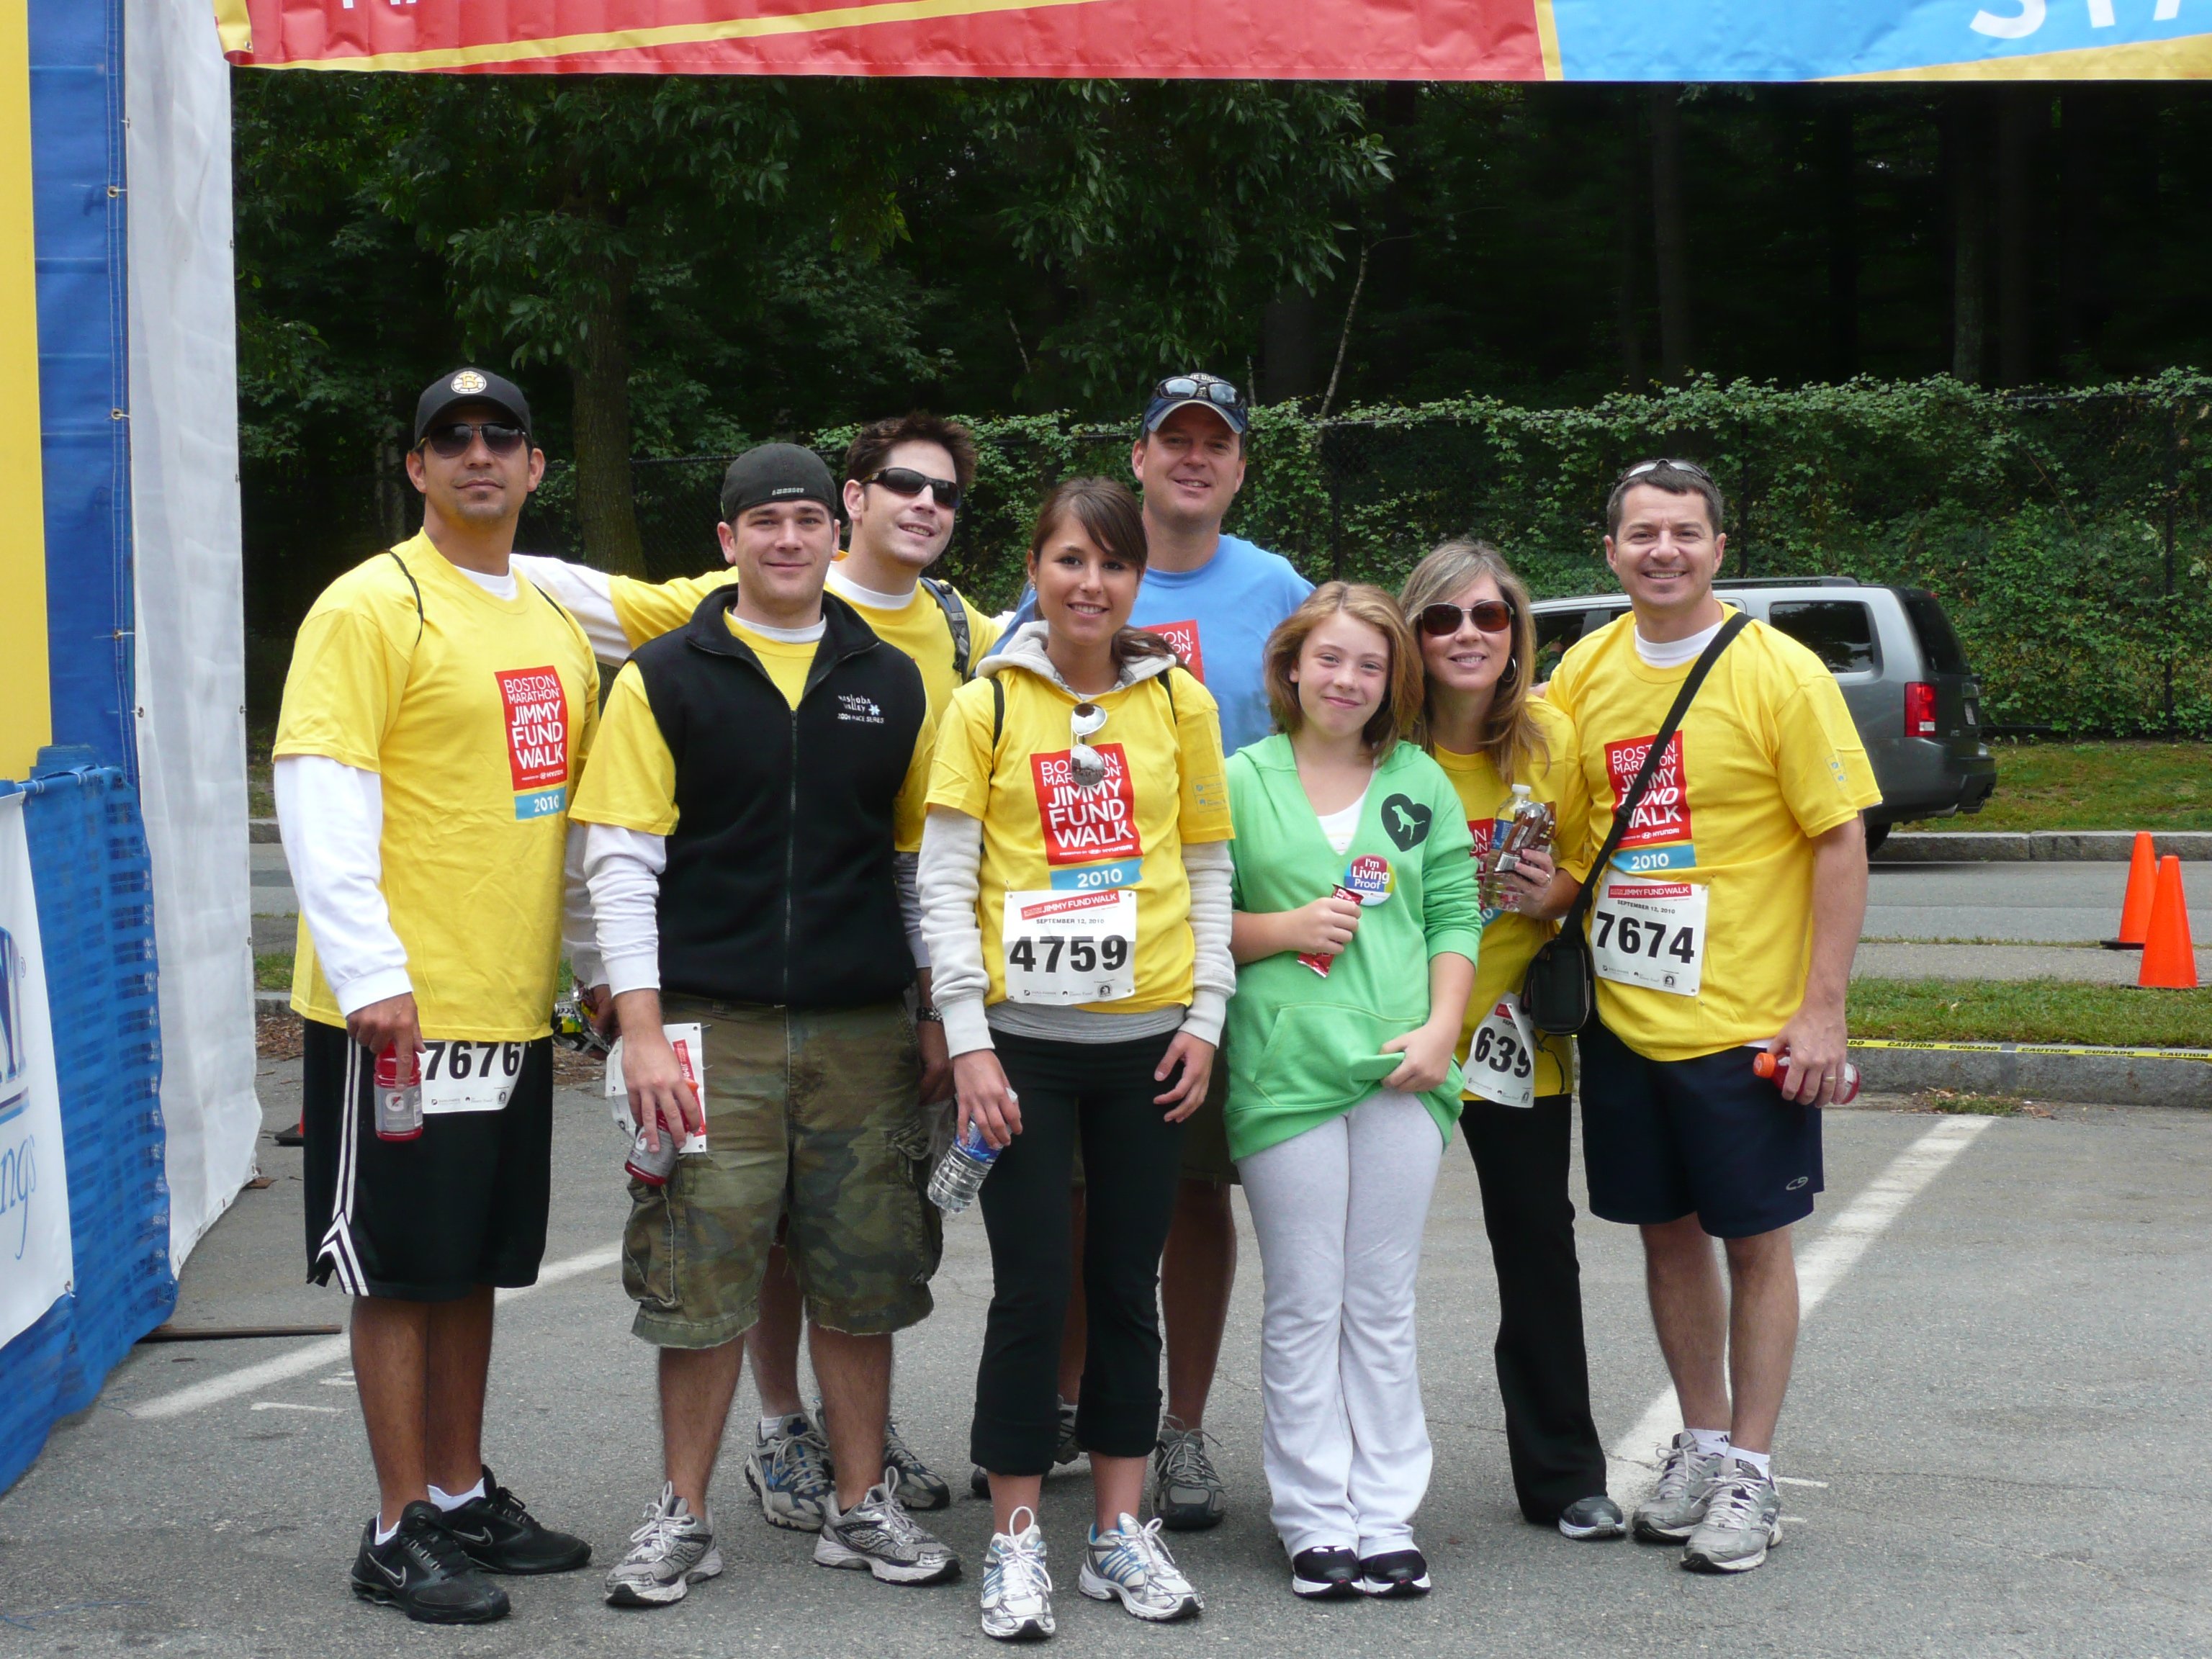 Treeline does the Boston Marathon Jimmy Fund Walk in 2010